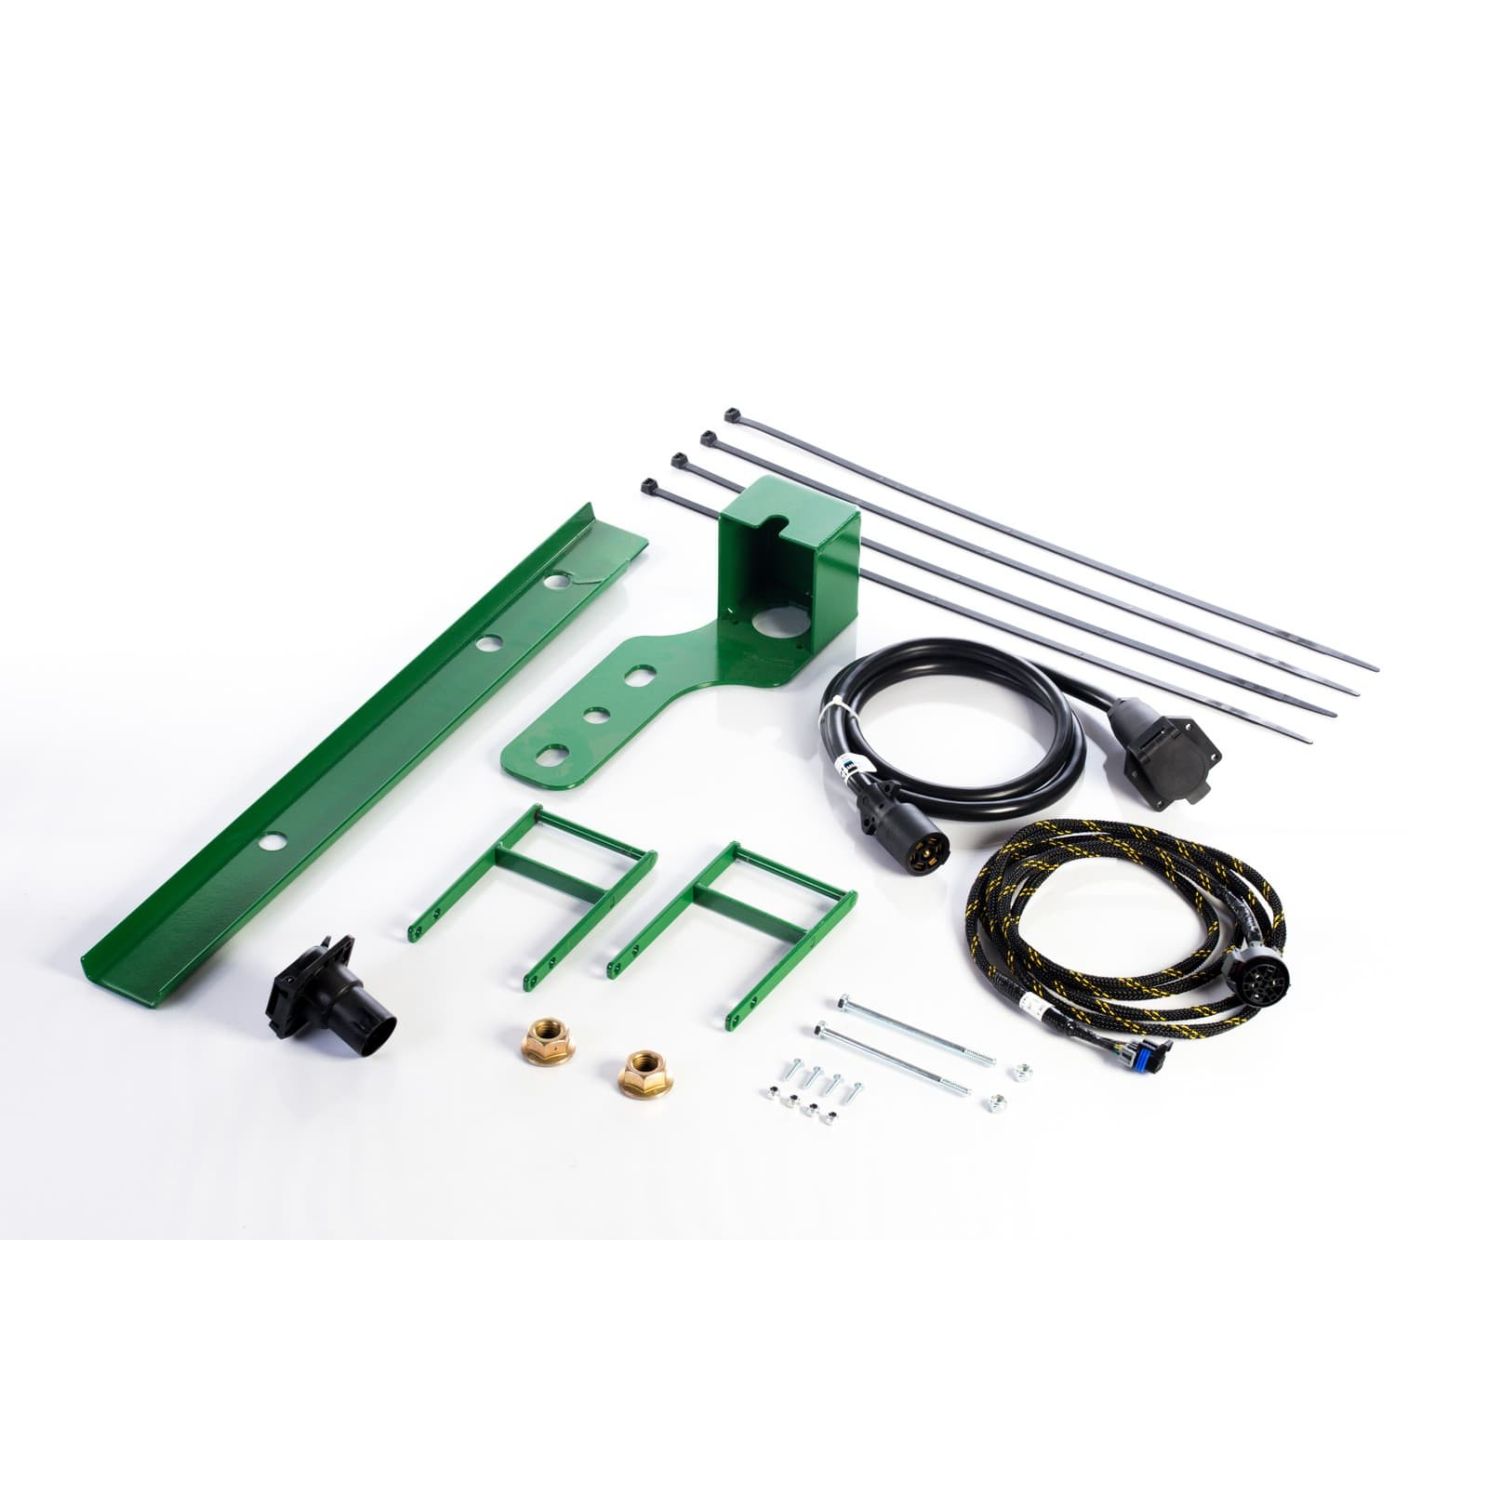 Lankota Trailer Wiring Harness Kit for John Deere® 70 and S Series Combines